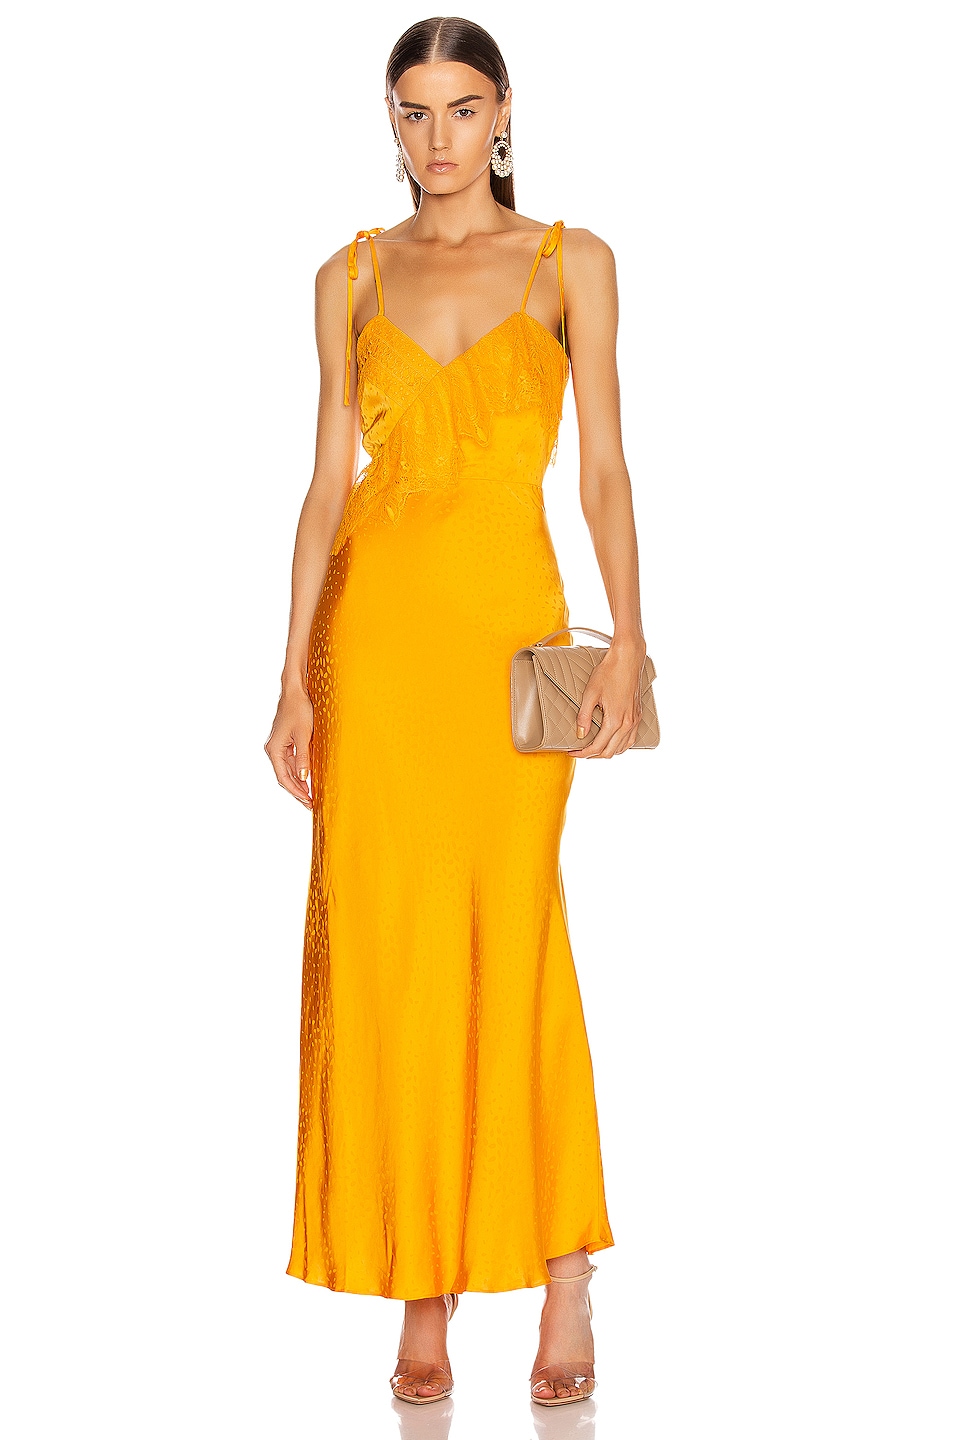 orange jacquard dress